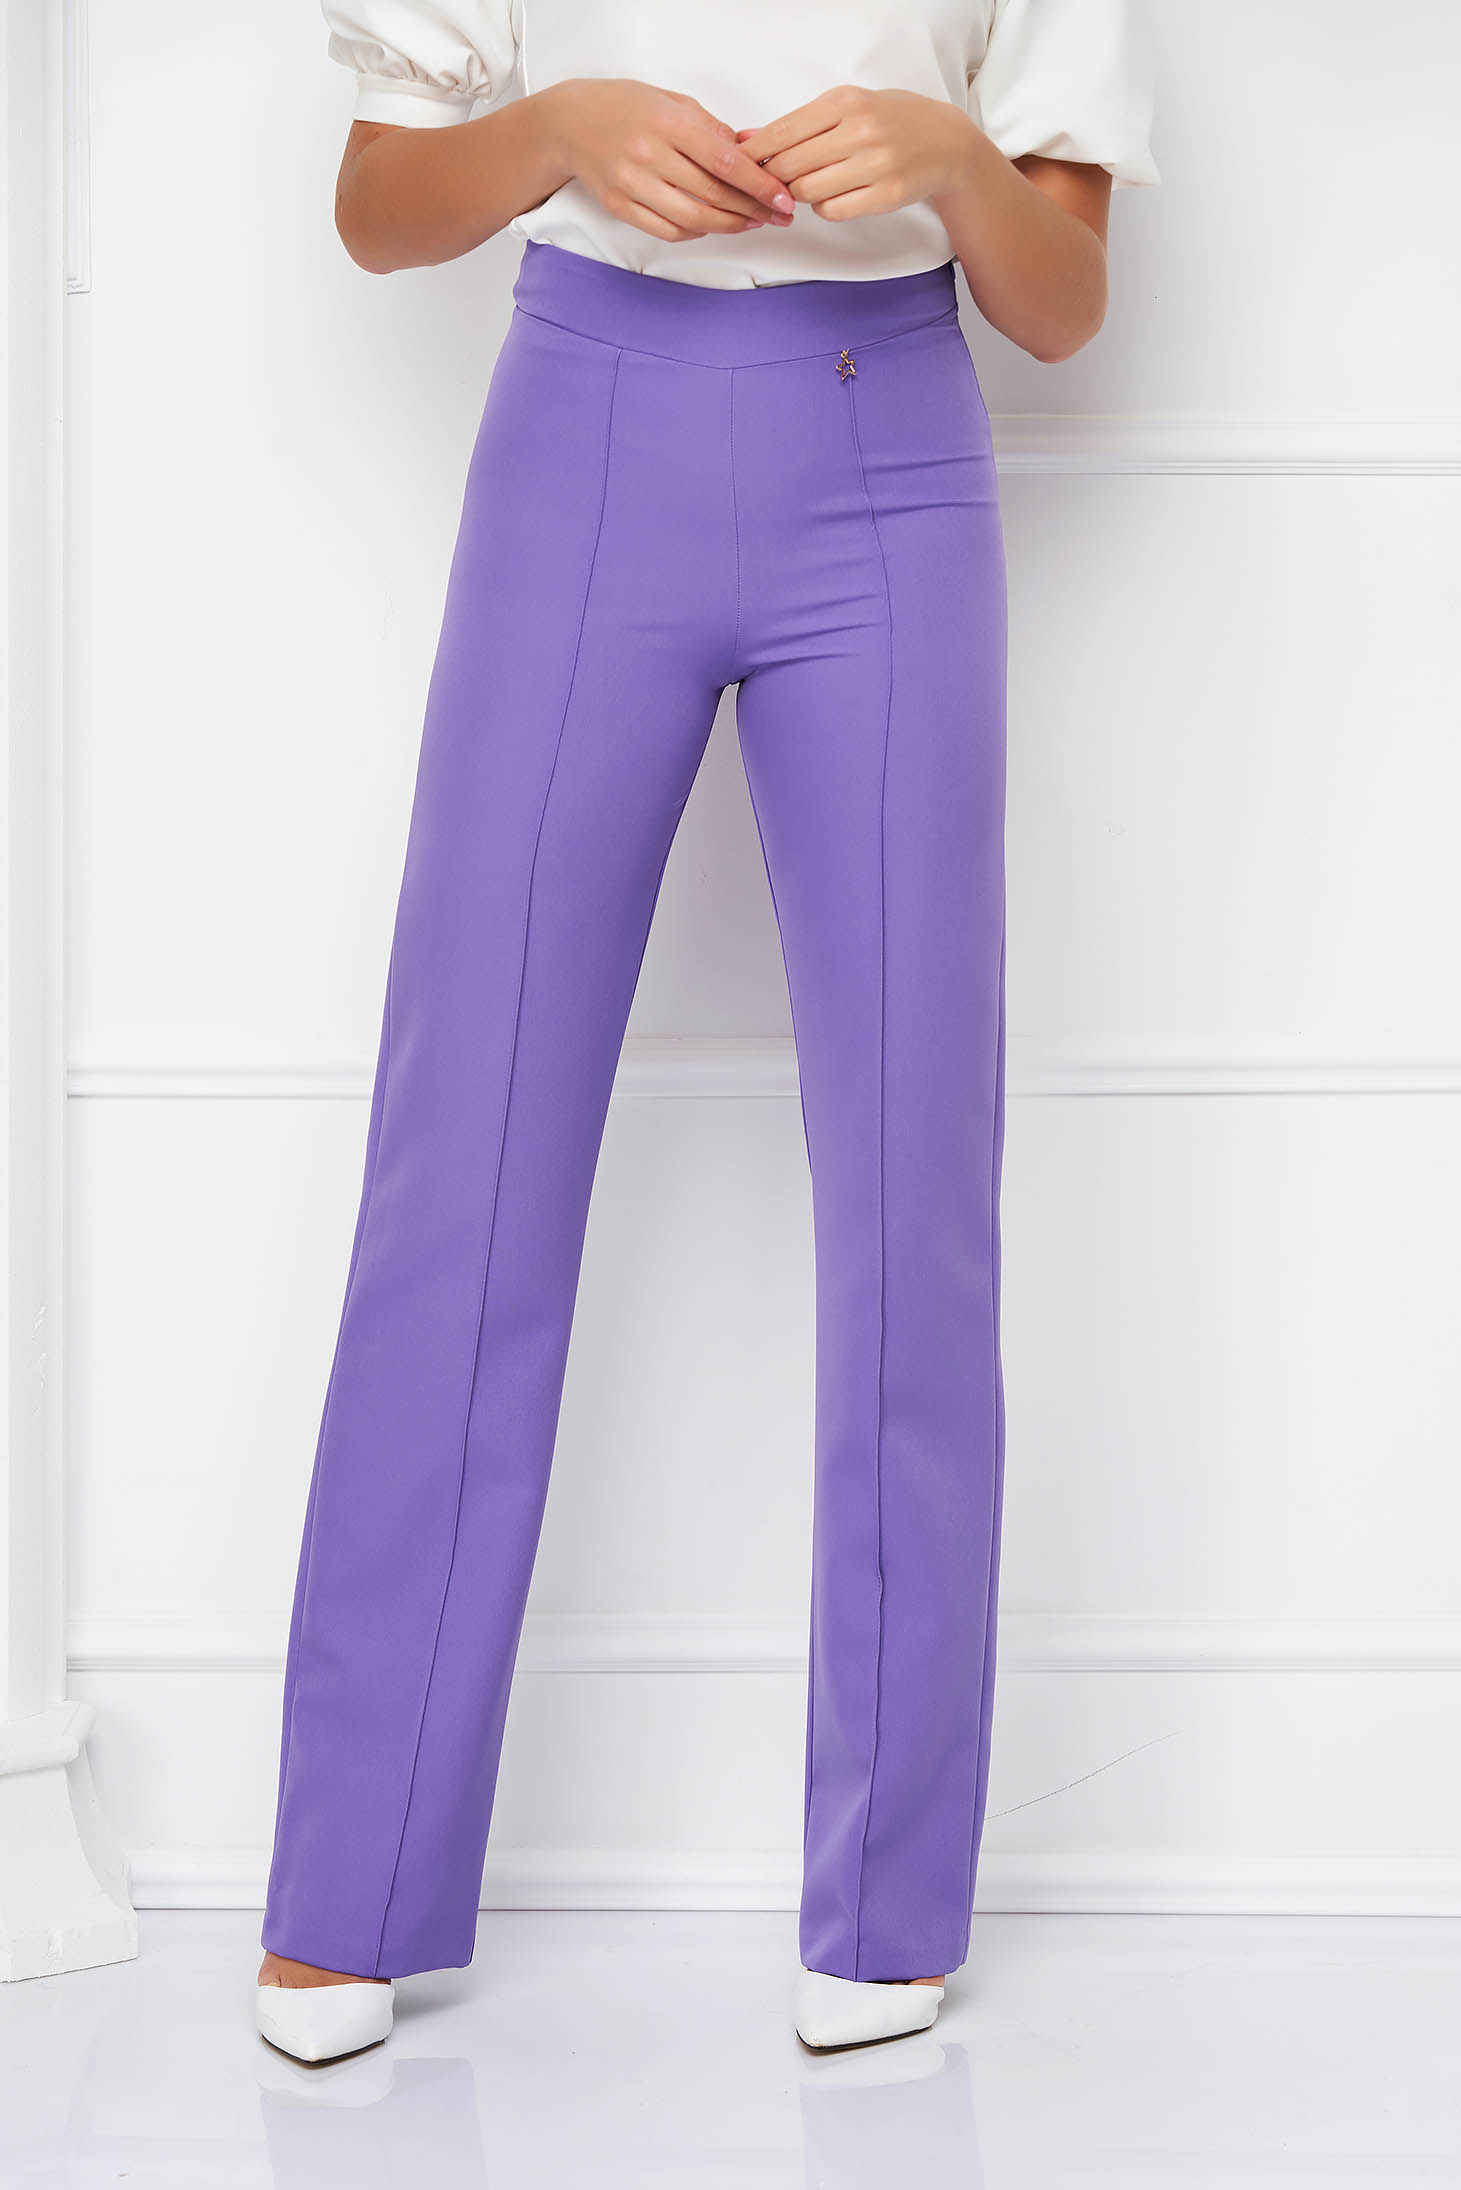 High Waist Flared Long Purple Stretch Fabric Pants - StarShinerS 2 - StarShinerS.com